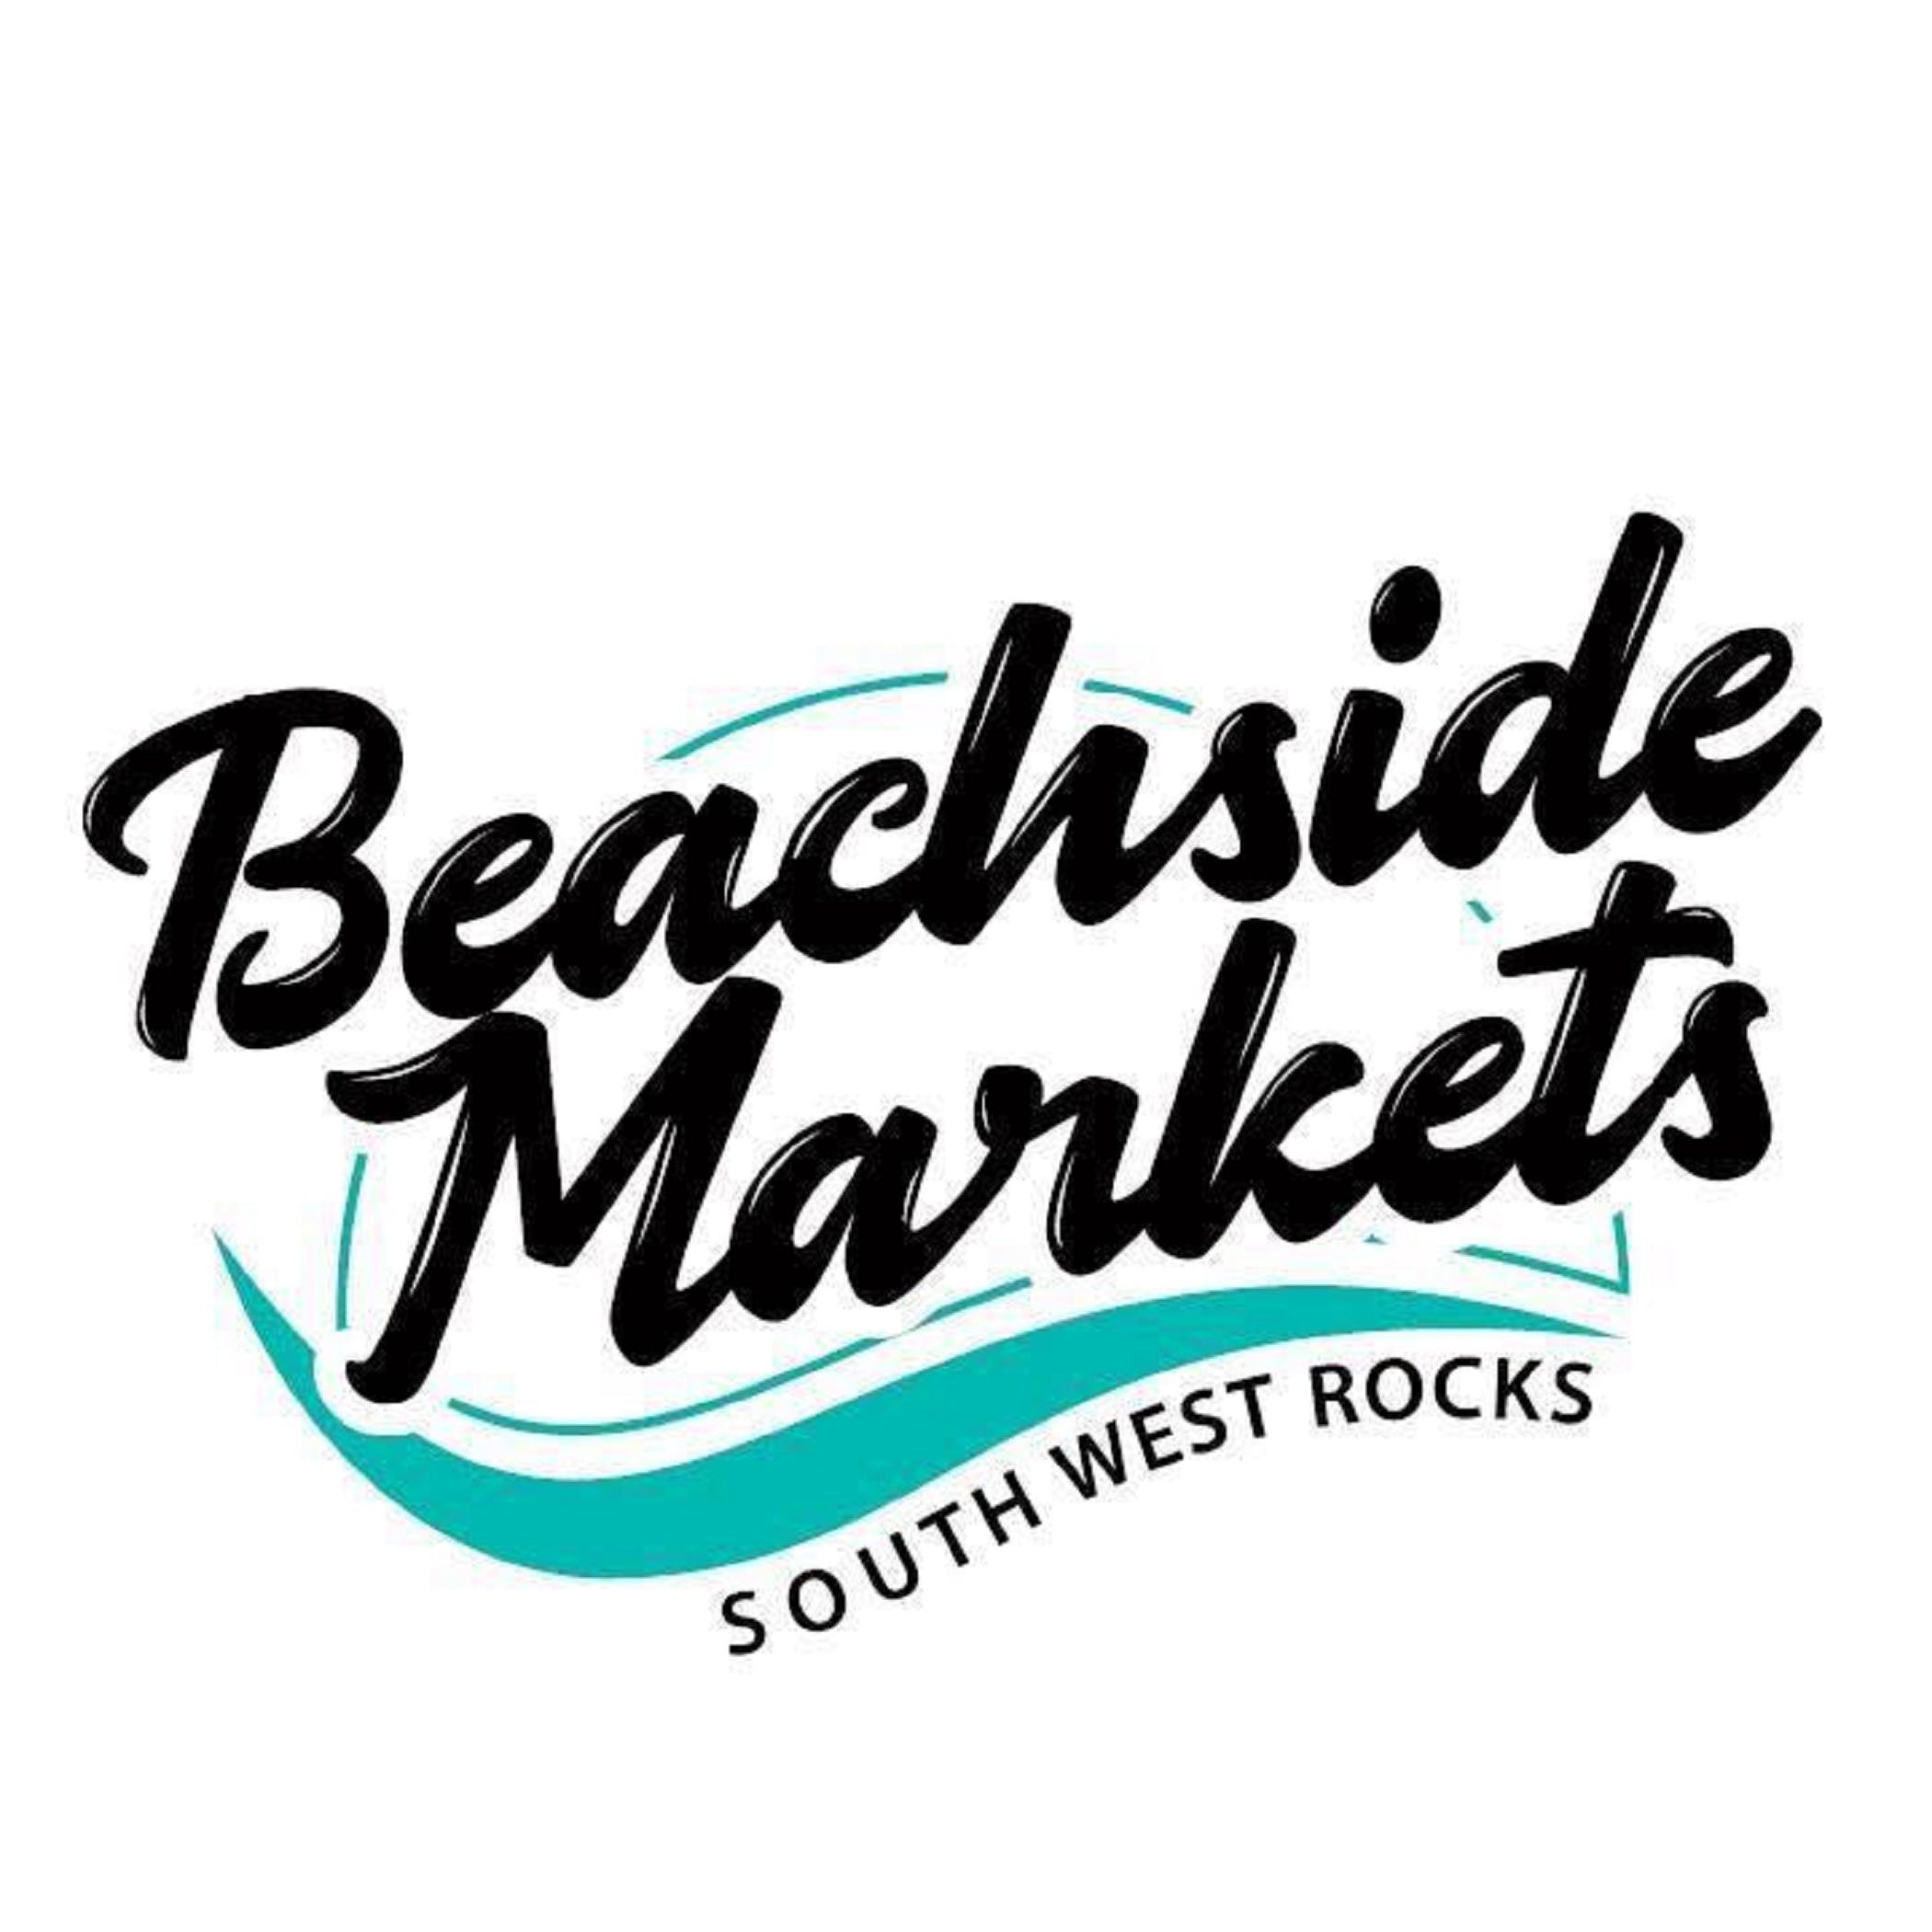 Beachside Markets South West Rocks - St Kilda Accommodation